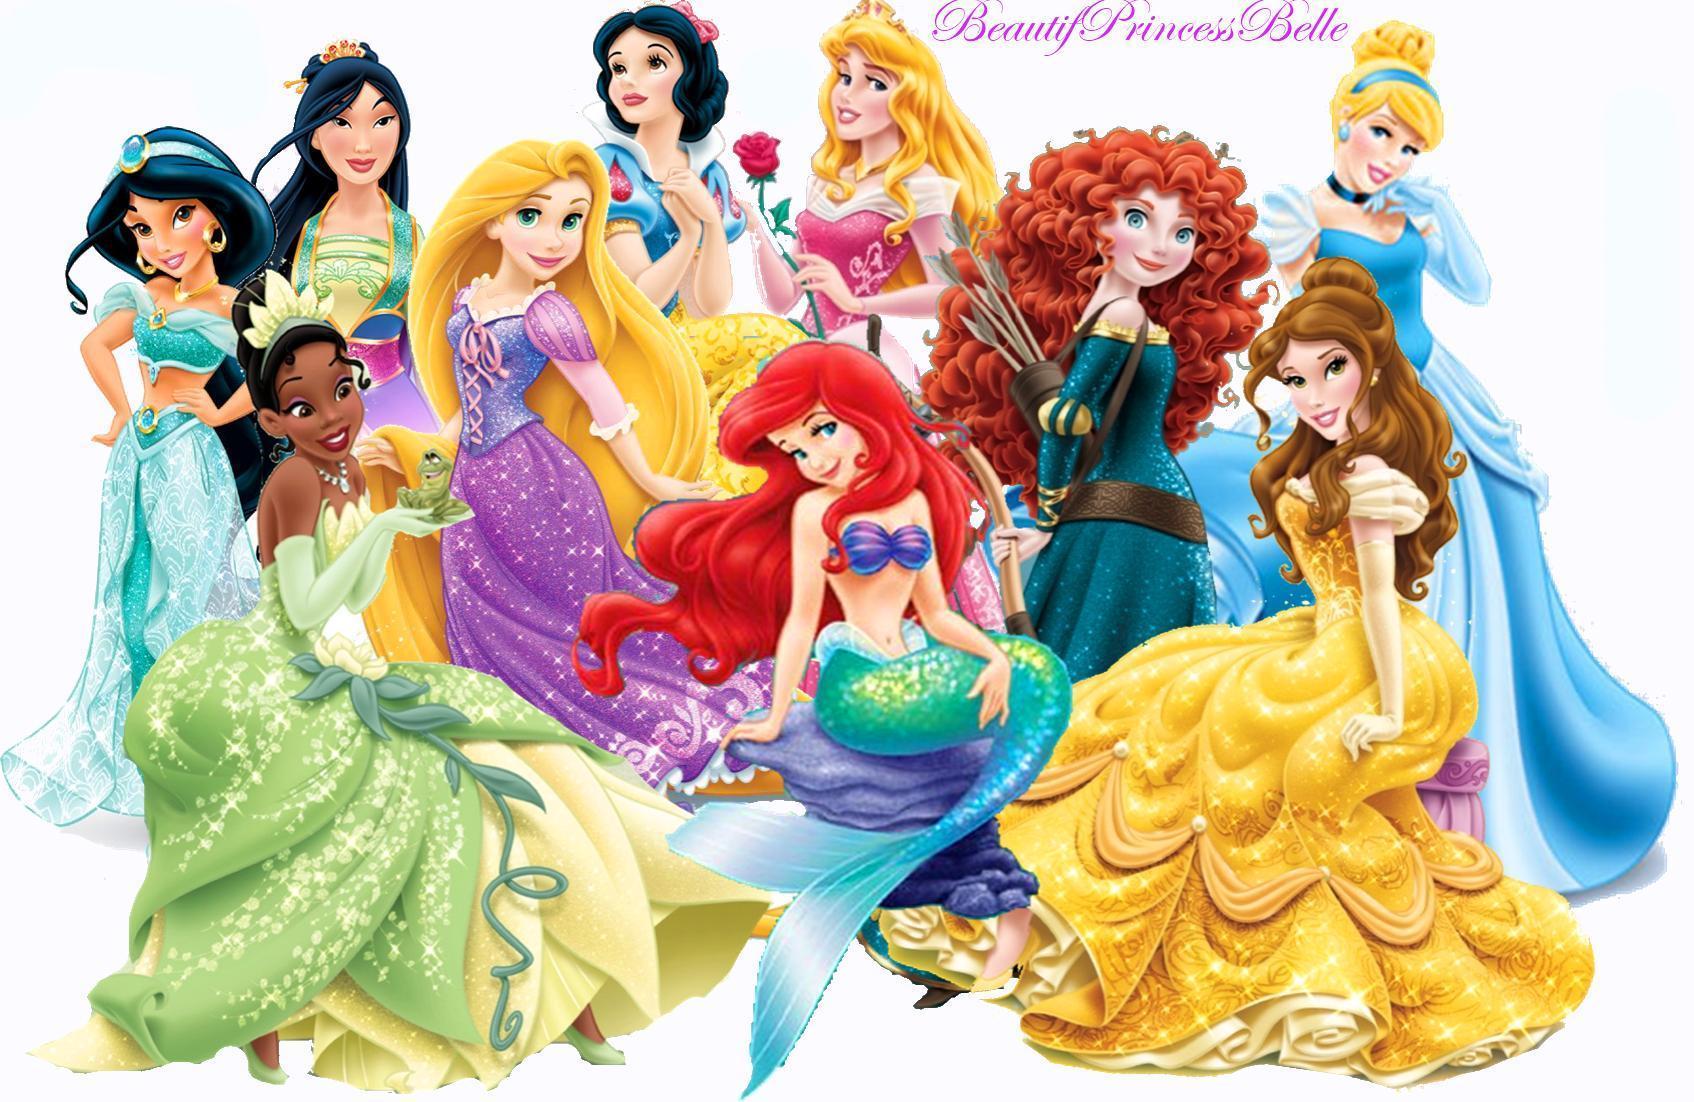 New Disney Princesses Look 2013 Image & Picture